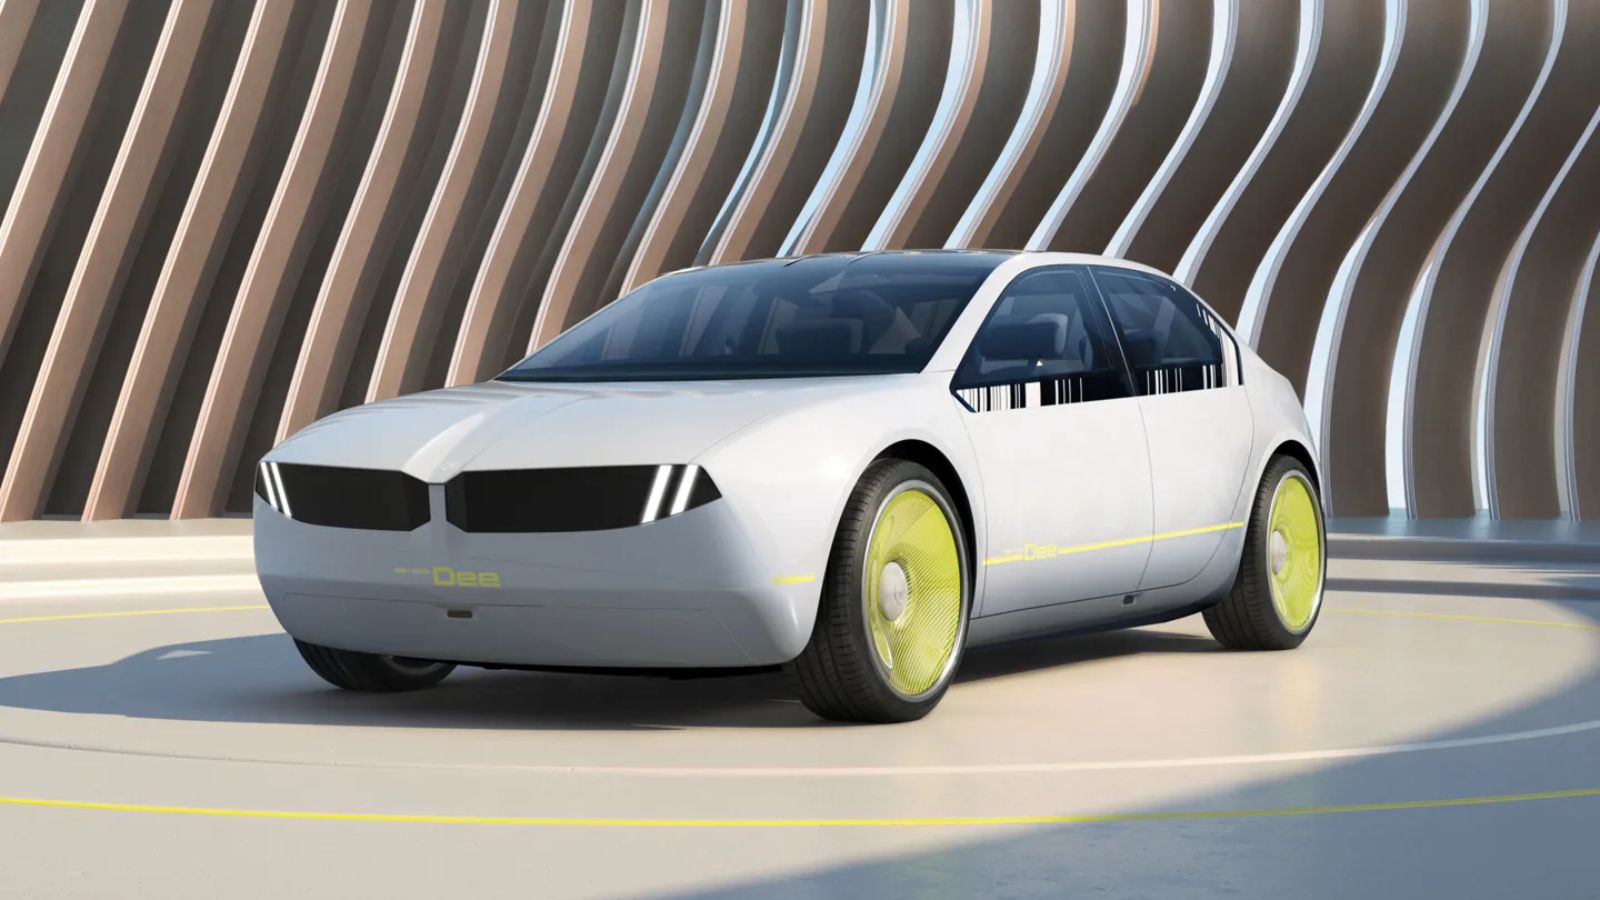 CES 2023: BMW Unveils Prototype Seemingly Set to Rival Apple Car - macrumors.com